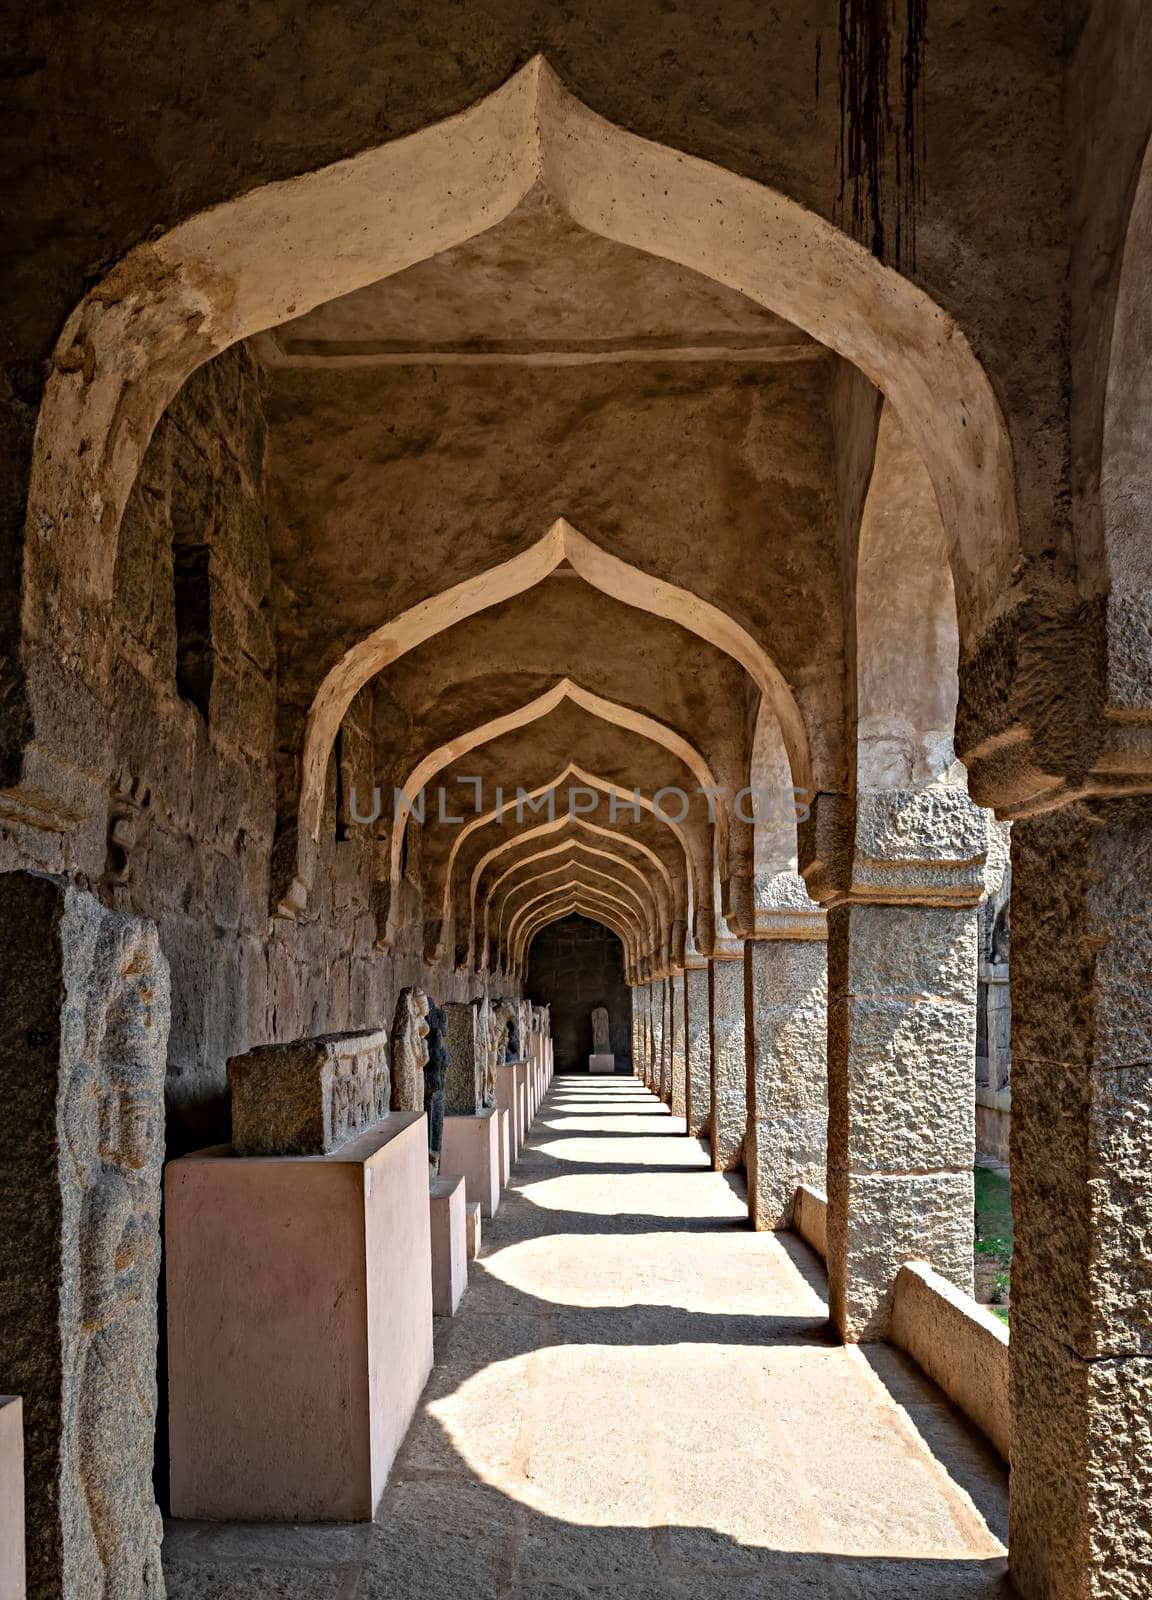 Unique , ancient door pattern in the corridor of lotus mahal temple in Hampi. by lalam